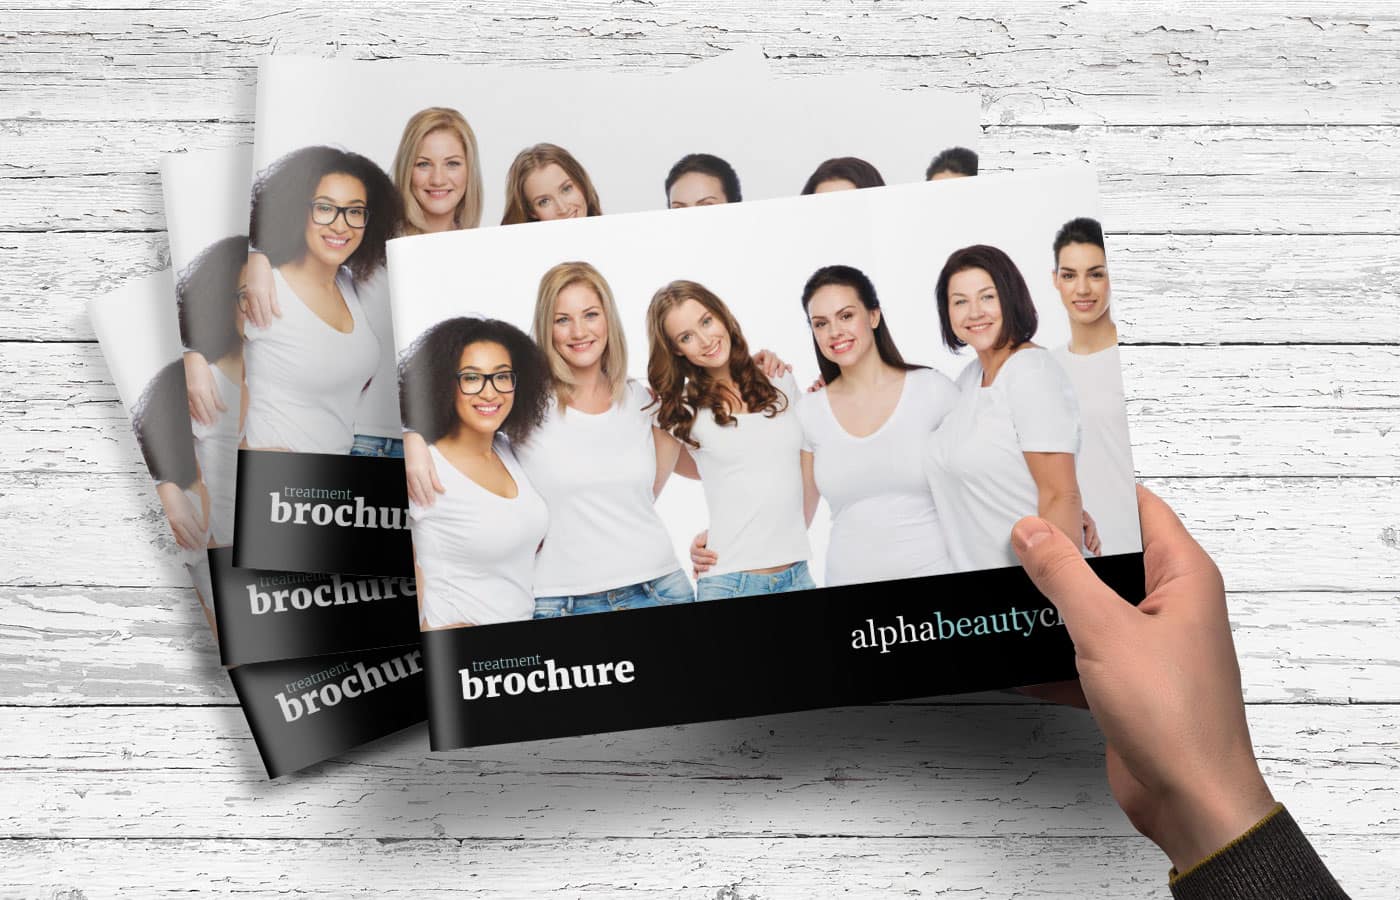 Alpha Beauty Clinic: Brochure Design, Printed Materials